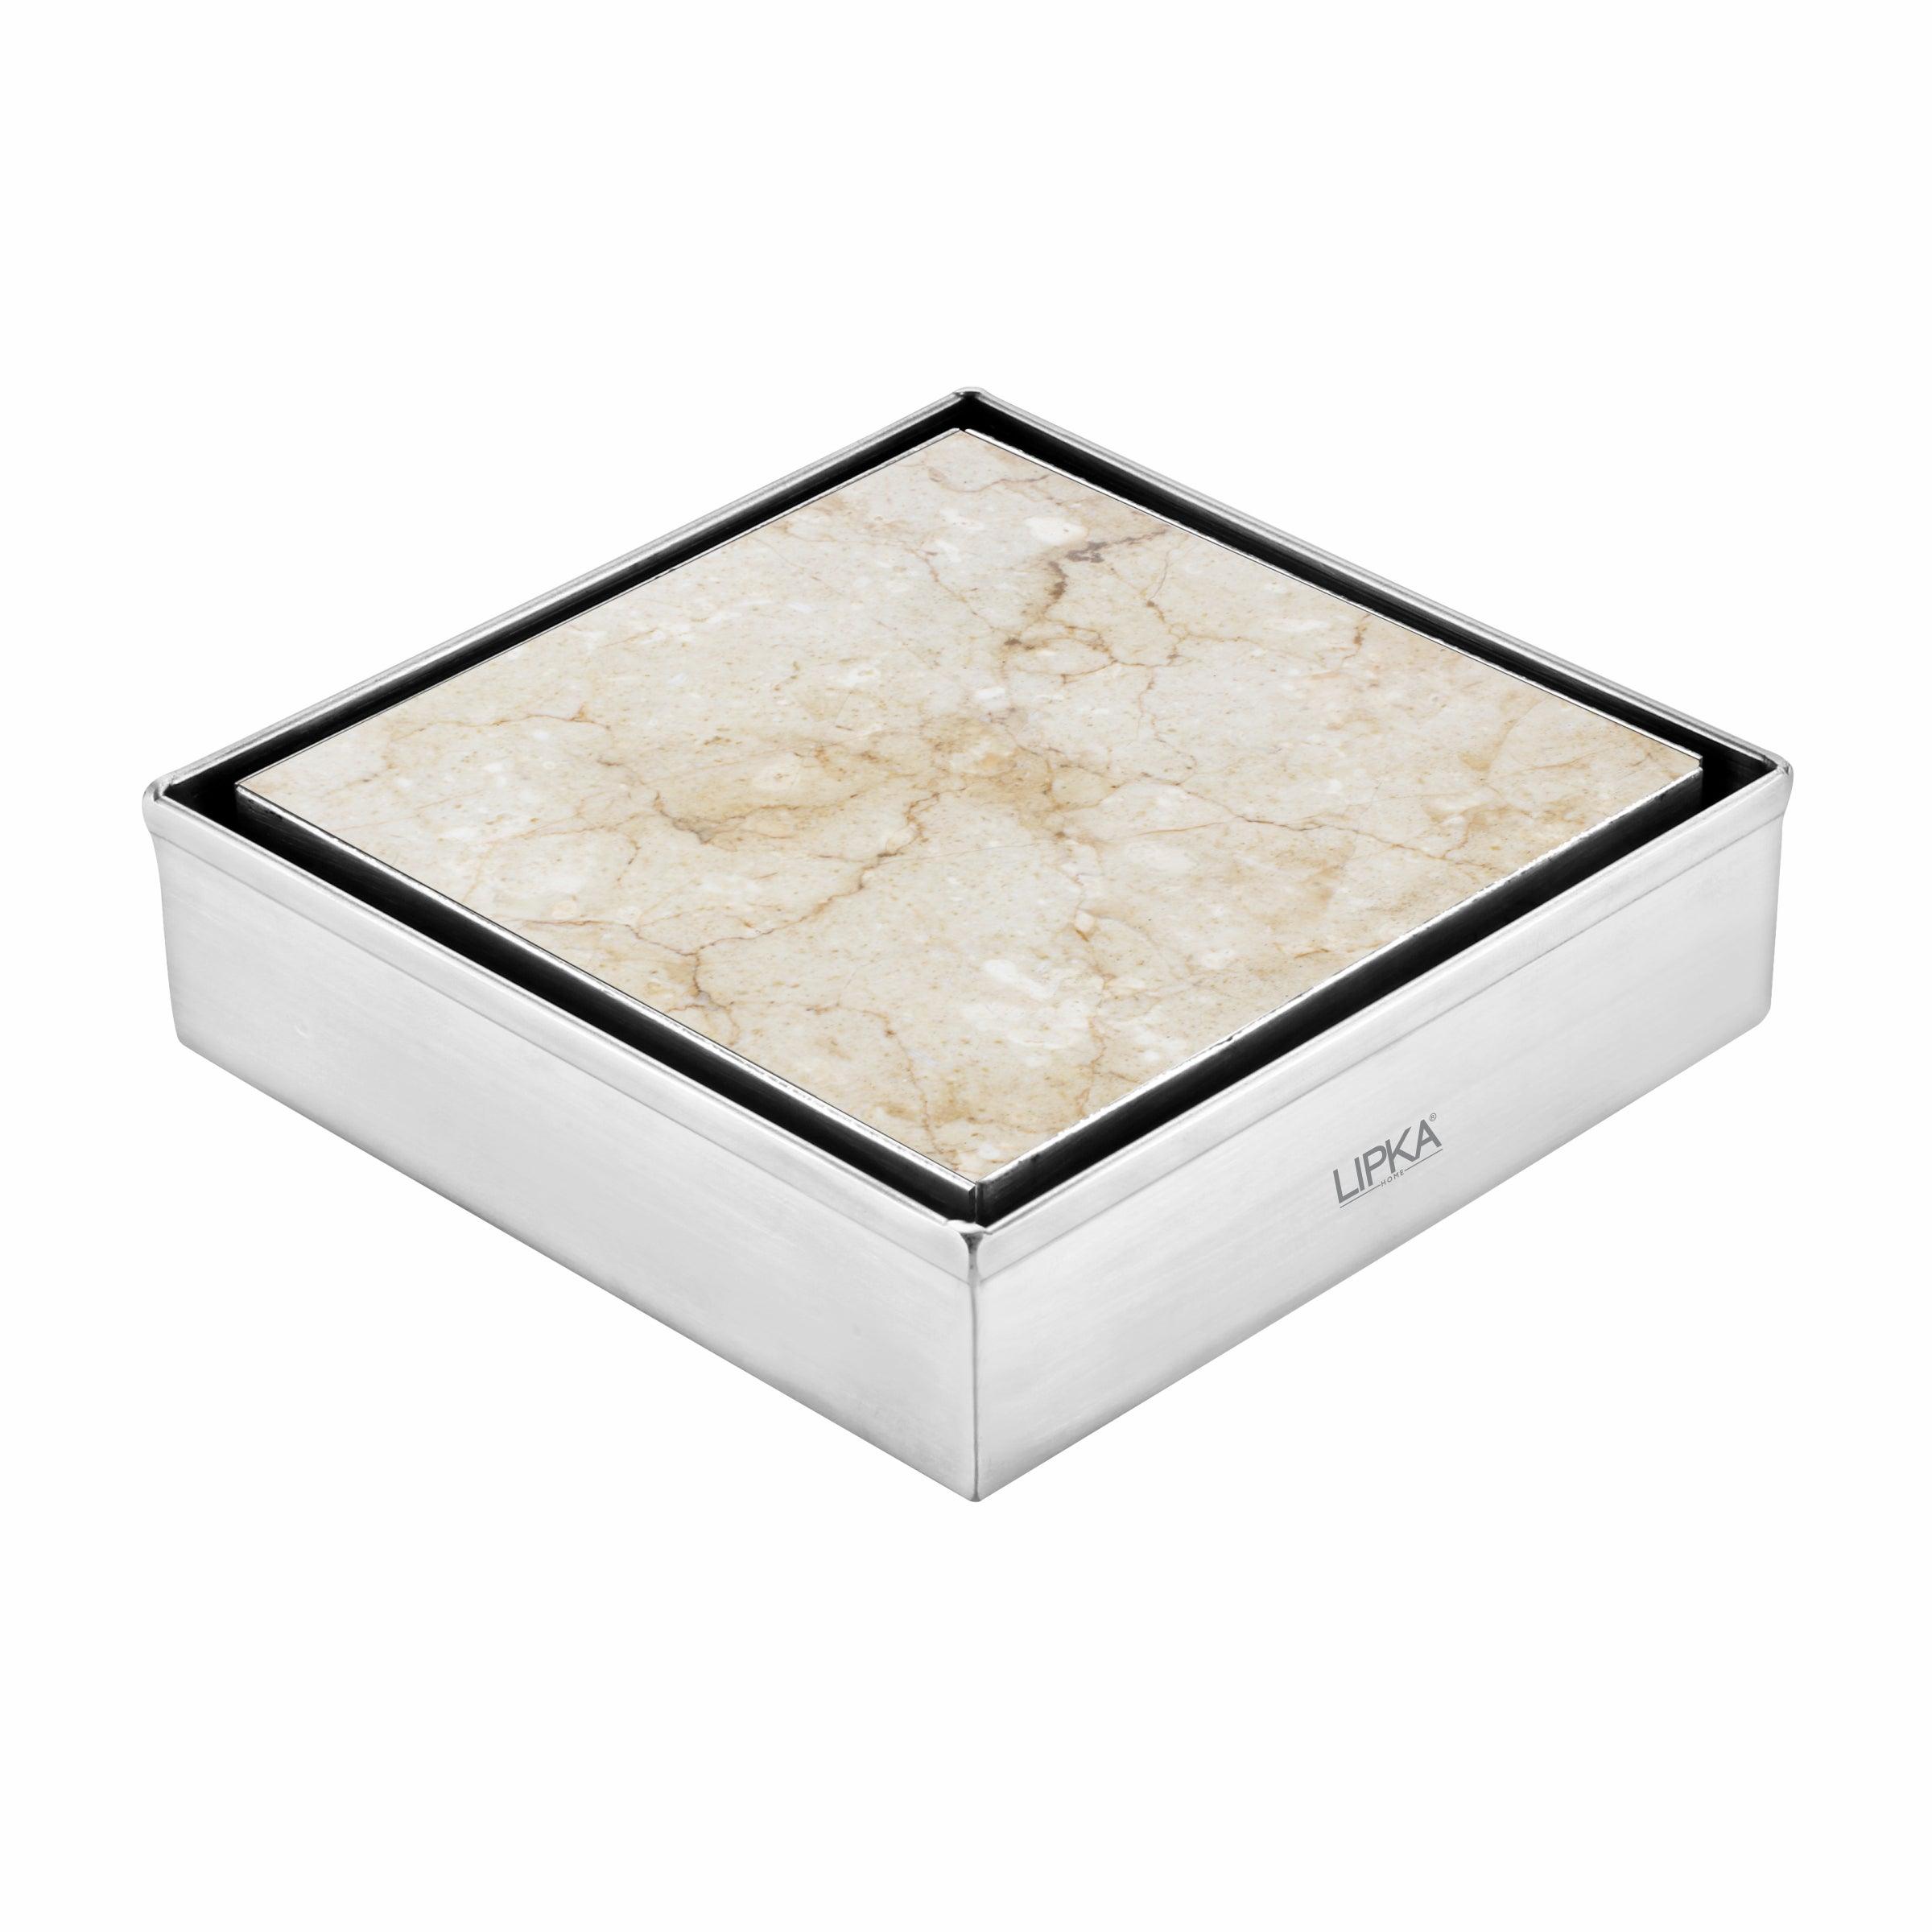 Tile Insert Square Floor Drain - Antique Copper (4 x 4 Inches) - LIPKA - Lipka Home